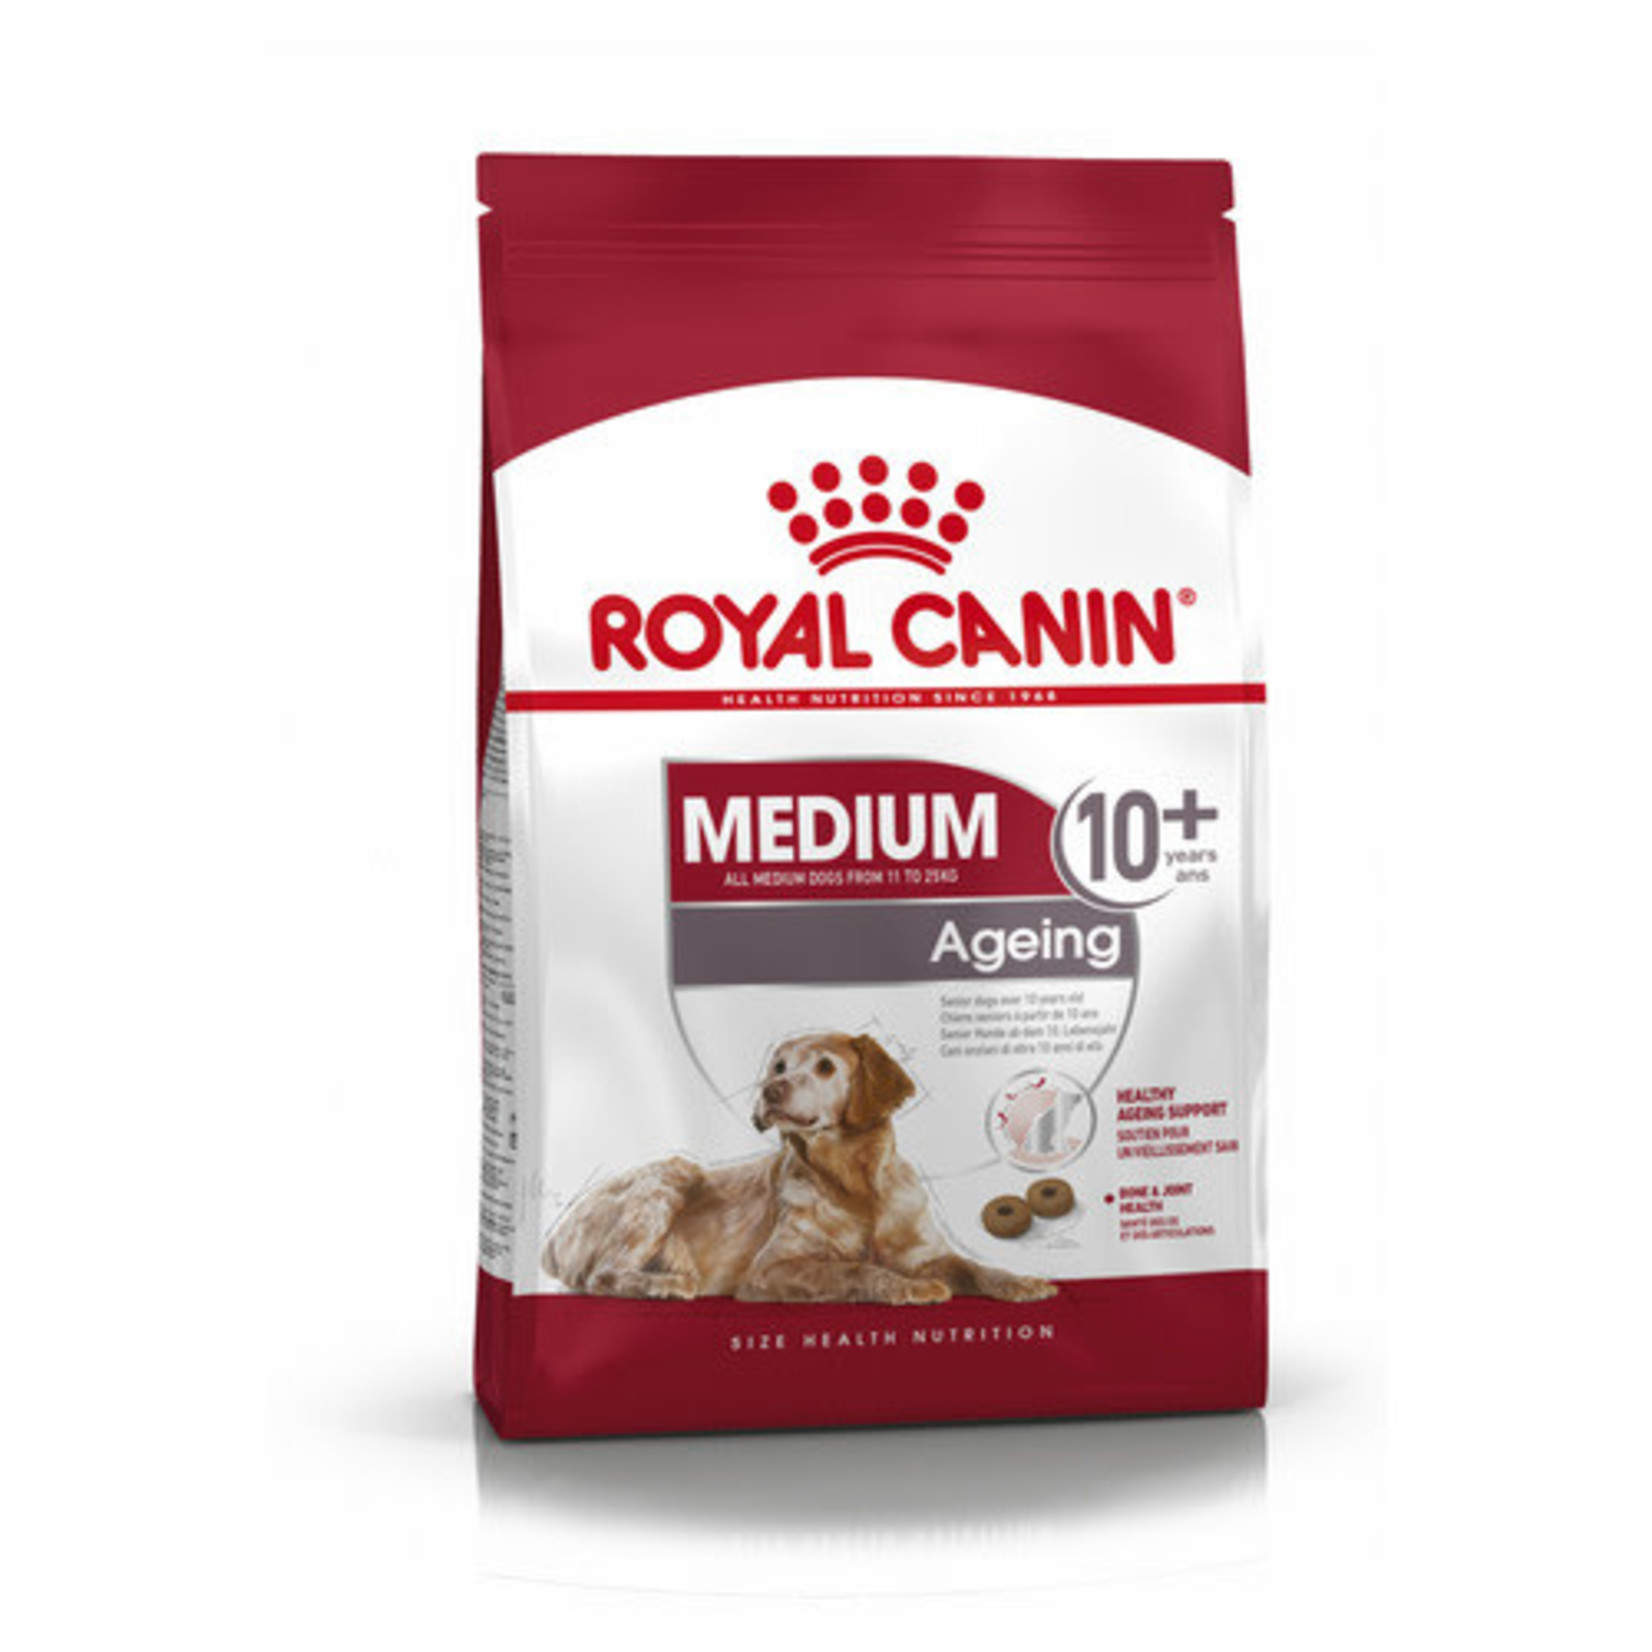 Royal Canin Royal Canin Medium Ageing 10+